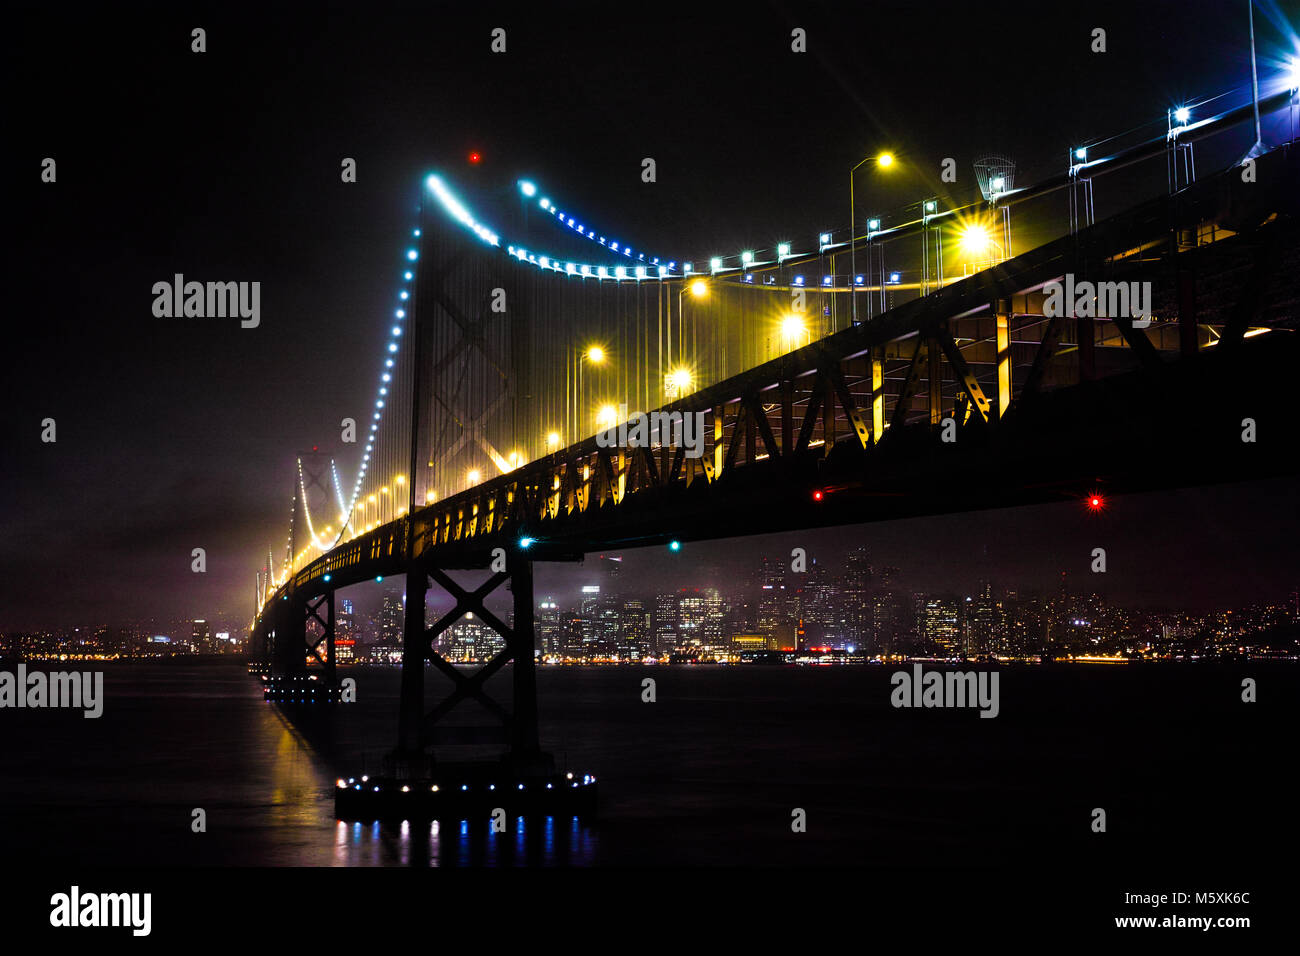 Illuminated San Francisco Oakland Bay Bridge at night Stock Photo